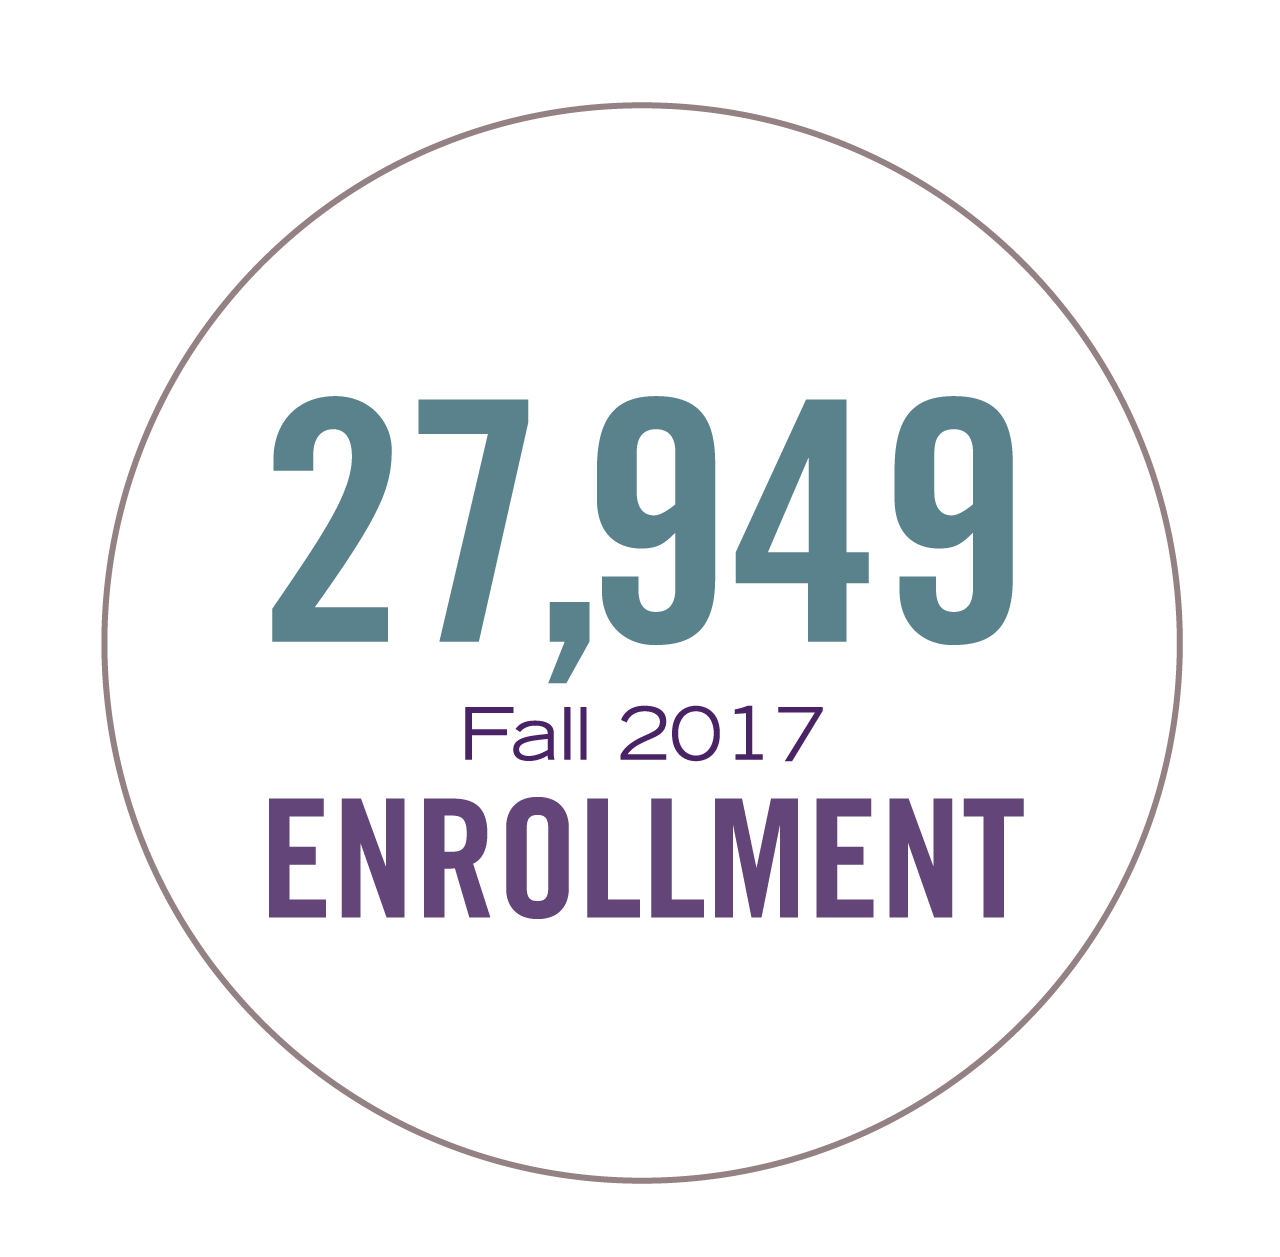 Fall 2017 enrollment 27,949